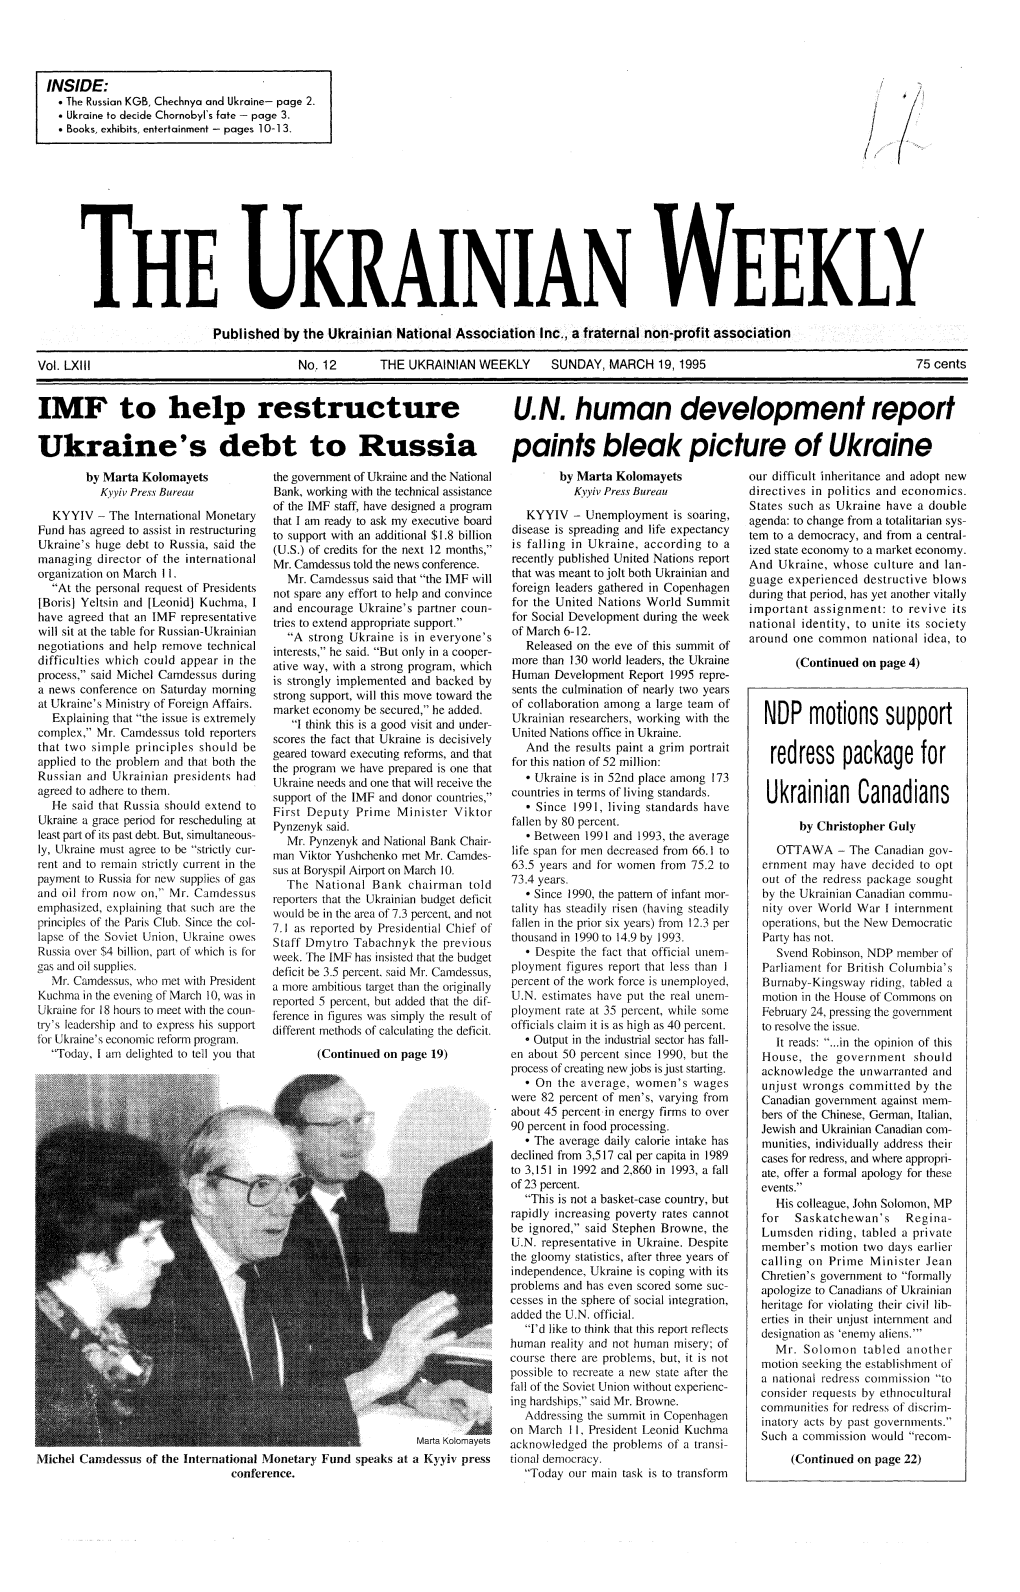 The Ukrainian Weekly 1995, No.12